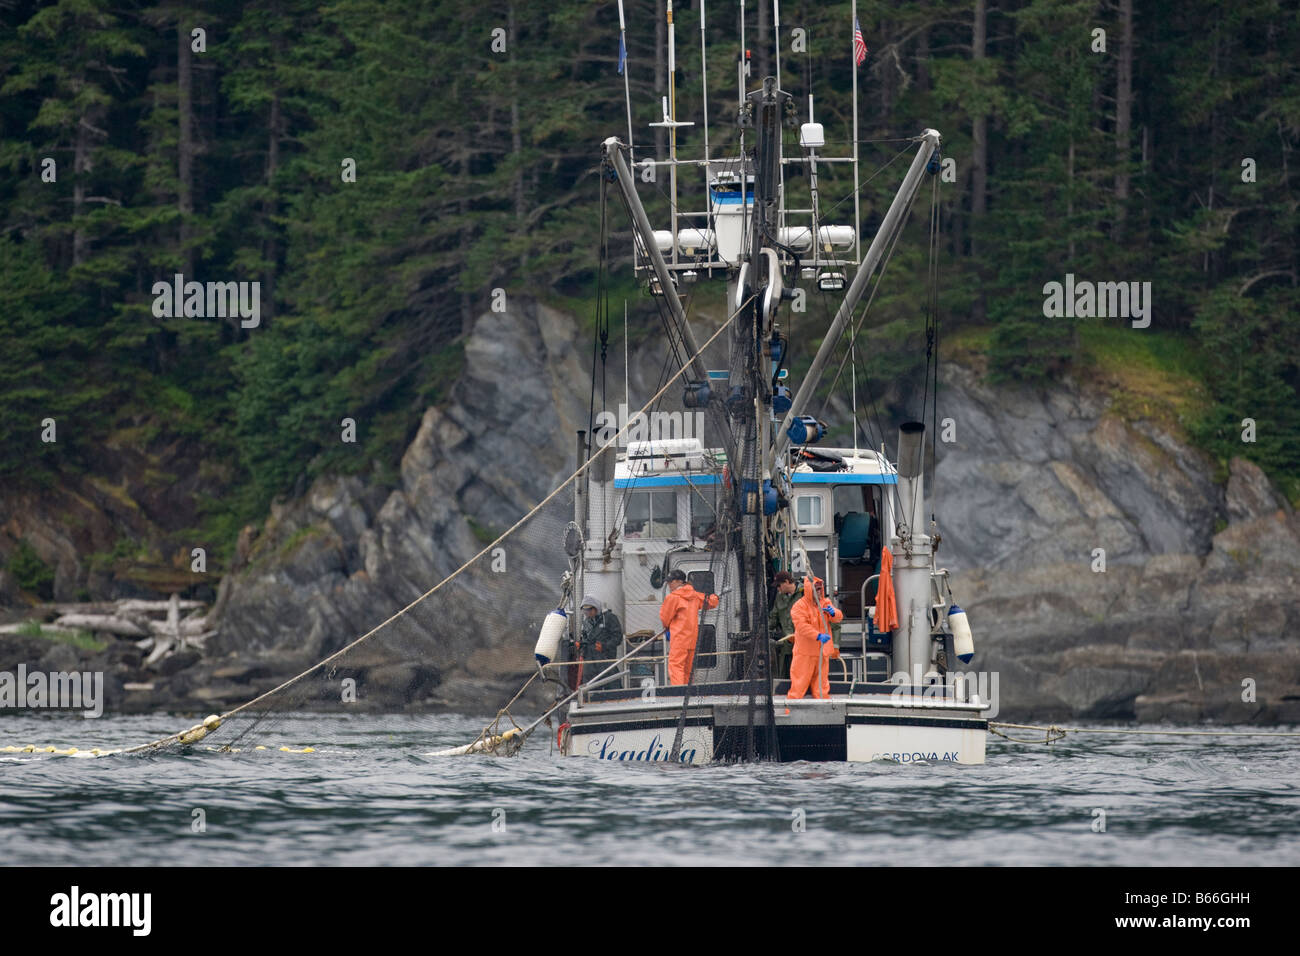 USA Alaska The F V Leading Lady a purse seiner salmon fishing boat gathers nets near feeding pod of Humpback Whales Stock Photo